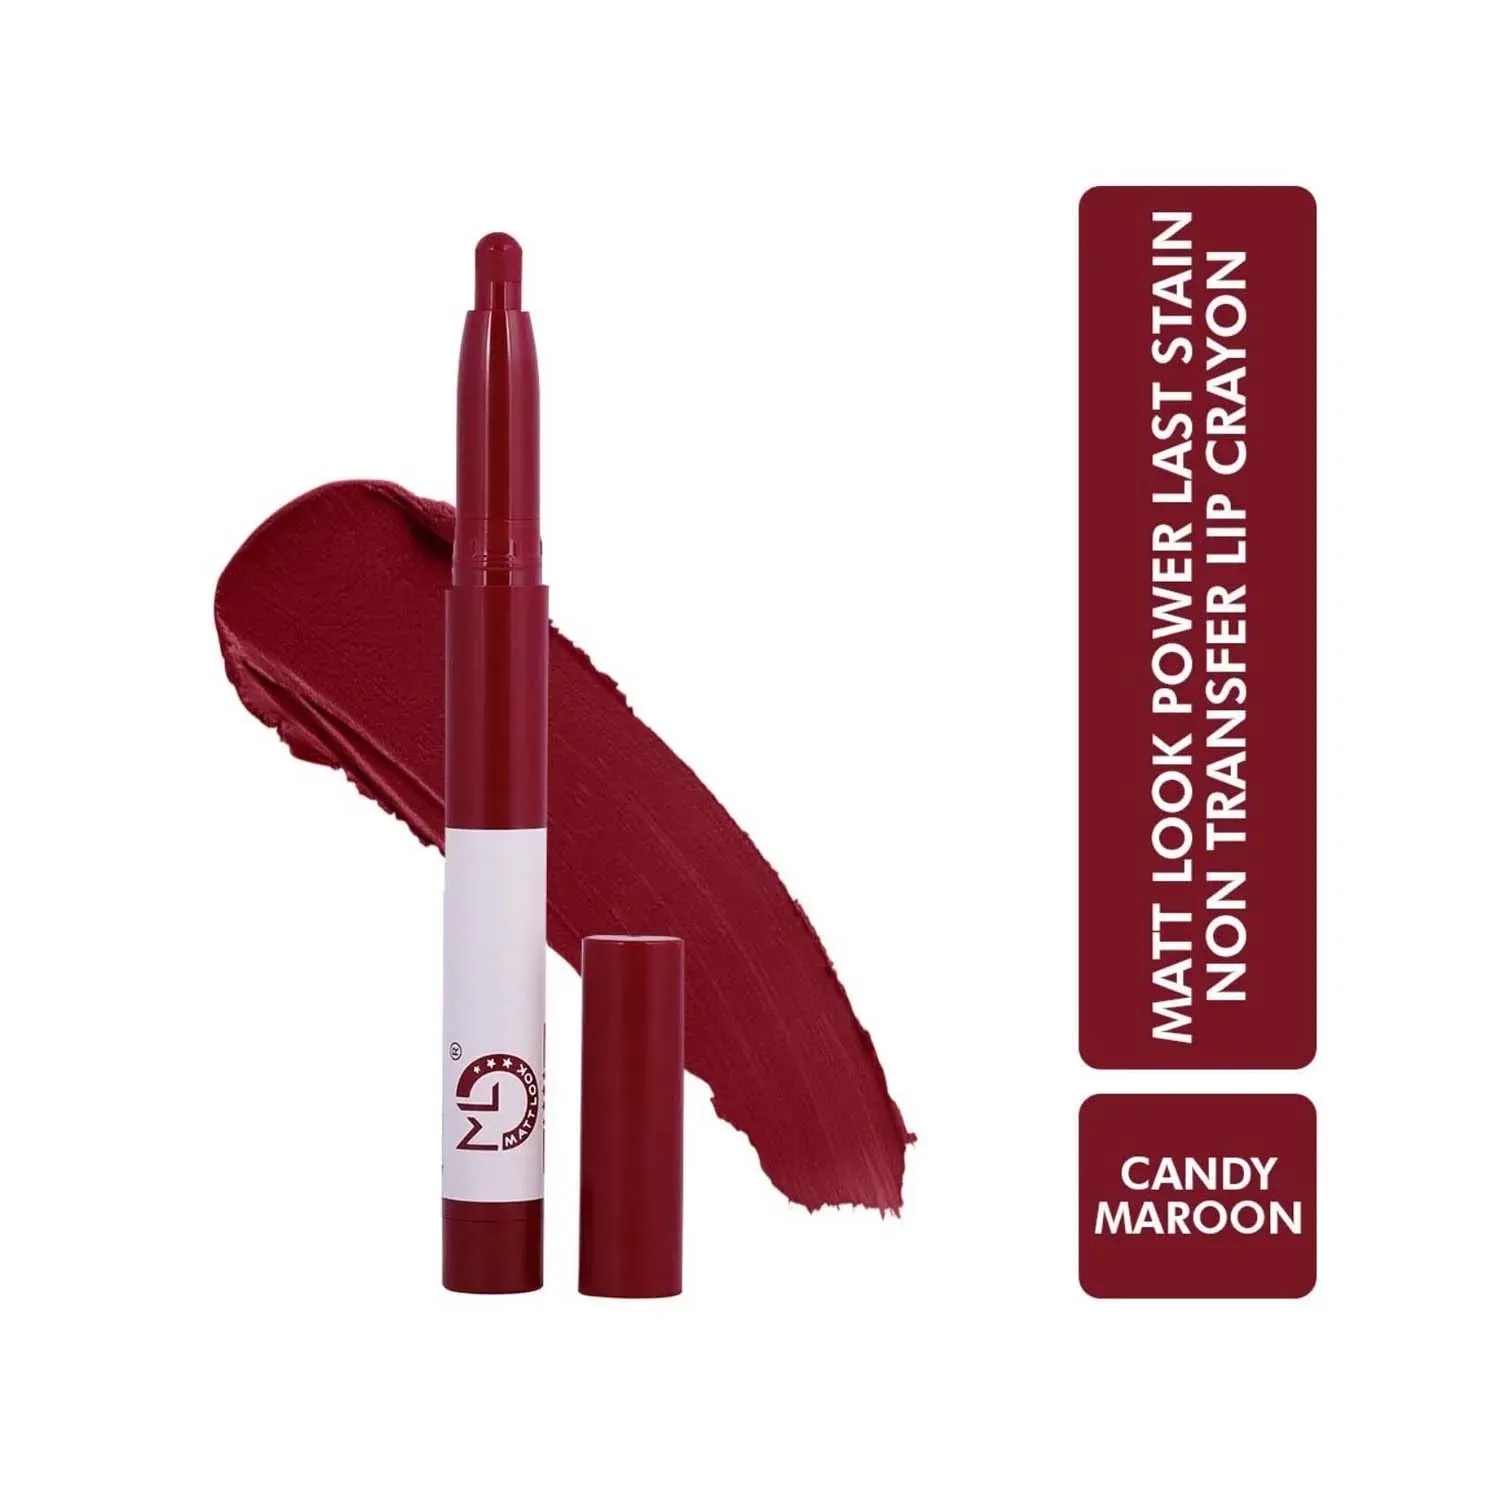 Matt Look Power Last Lip Stain Crayon Lipstick - Candy Maroon (1.3g)